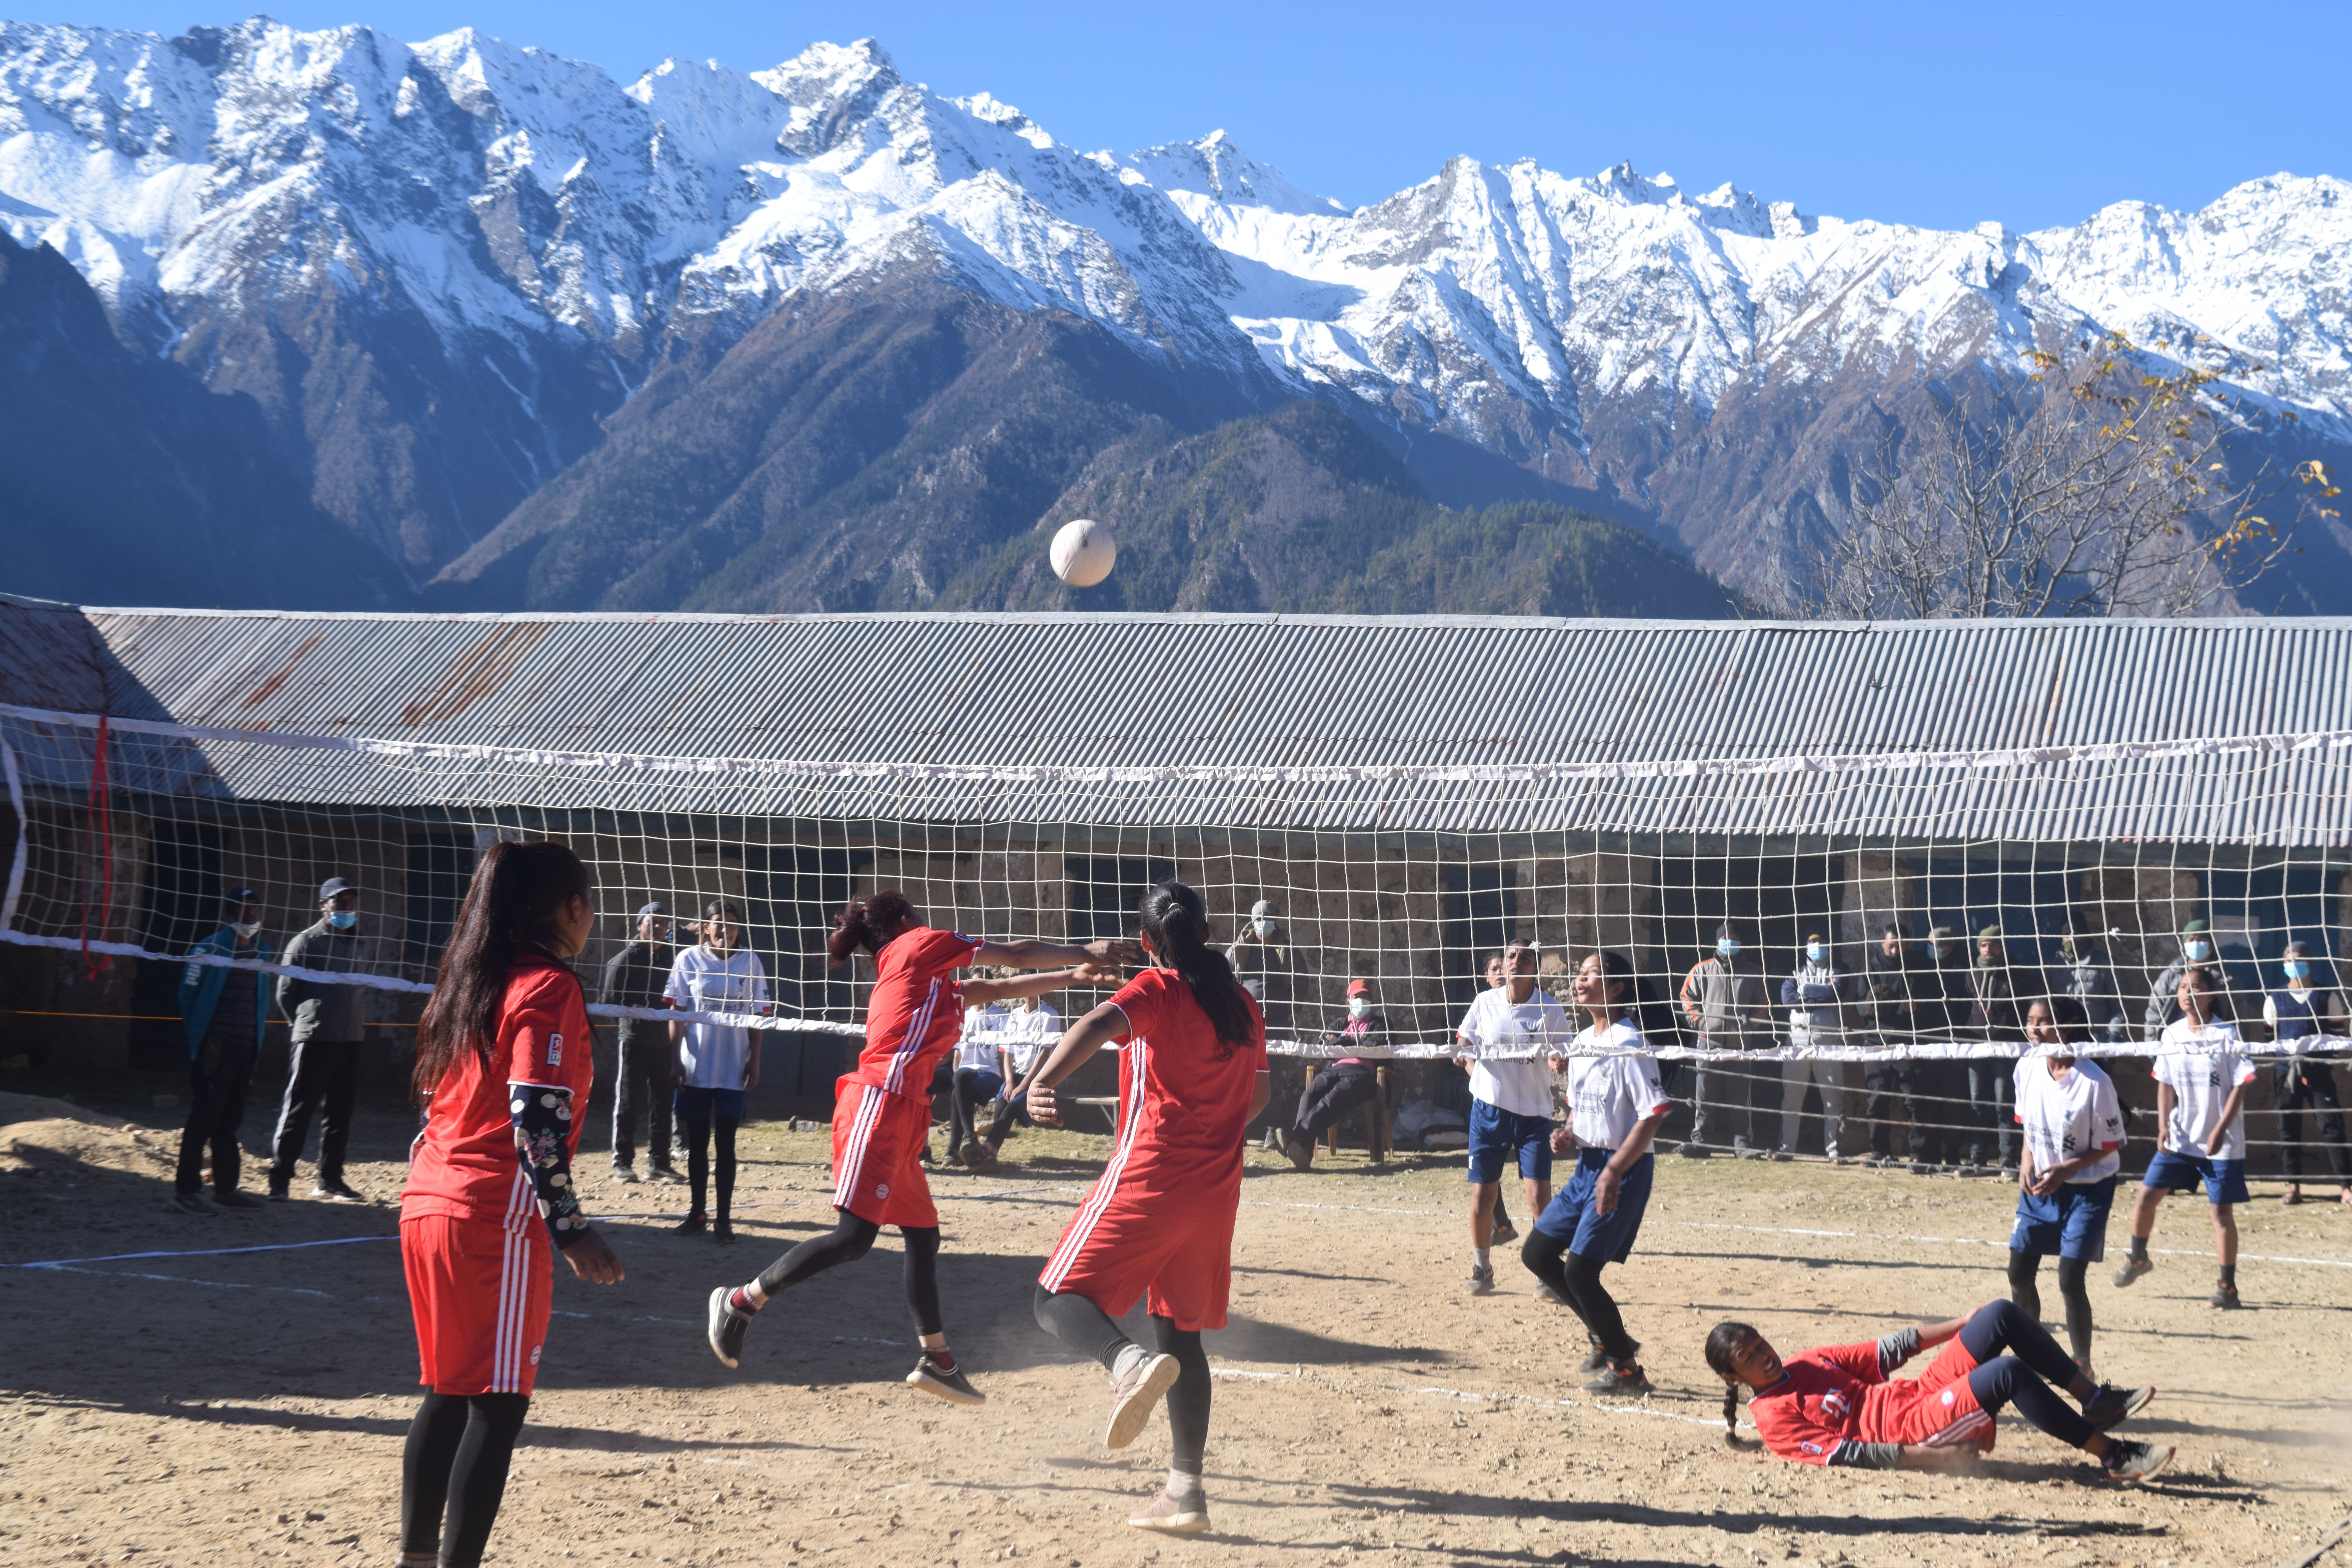 inter-rural-municipality-volleyball-match-in-humla